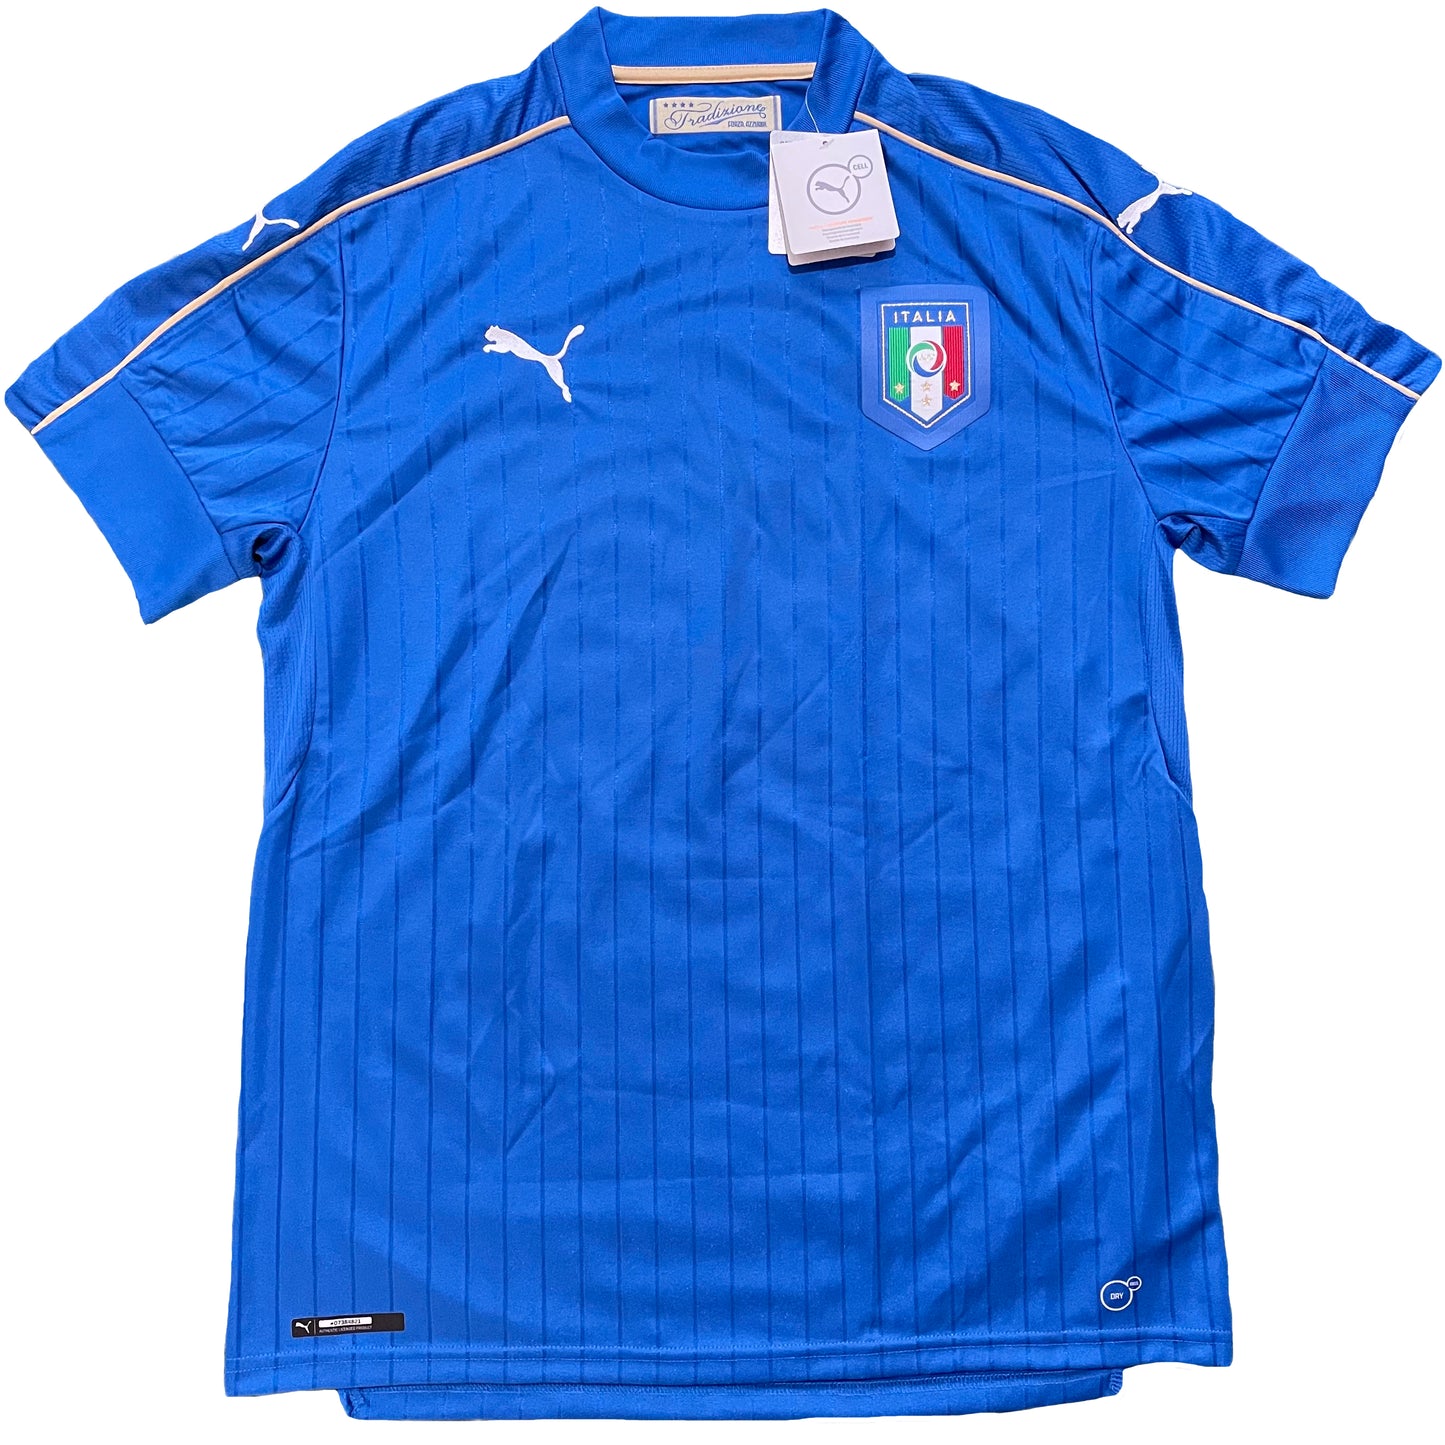 2016 Euro Italy home shirt (L)